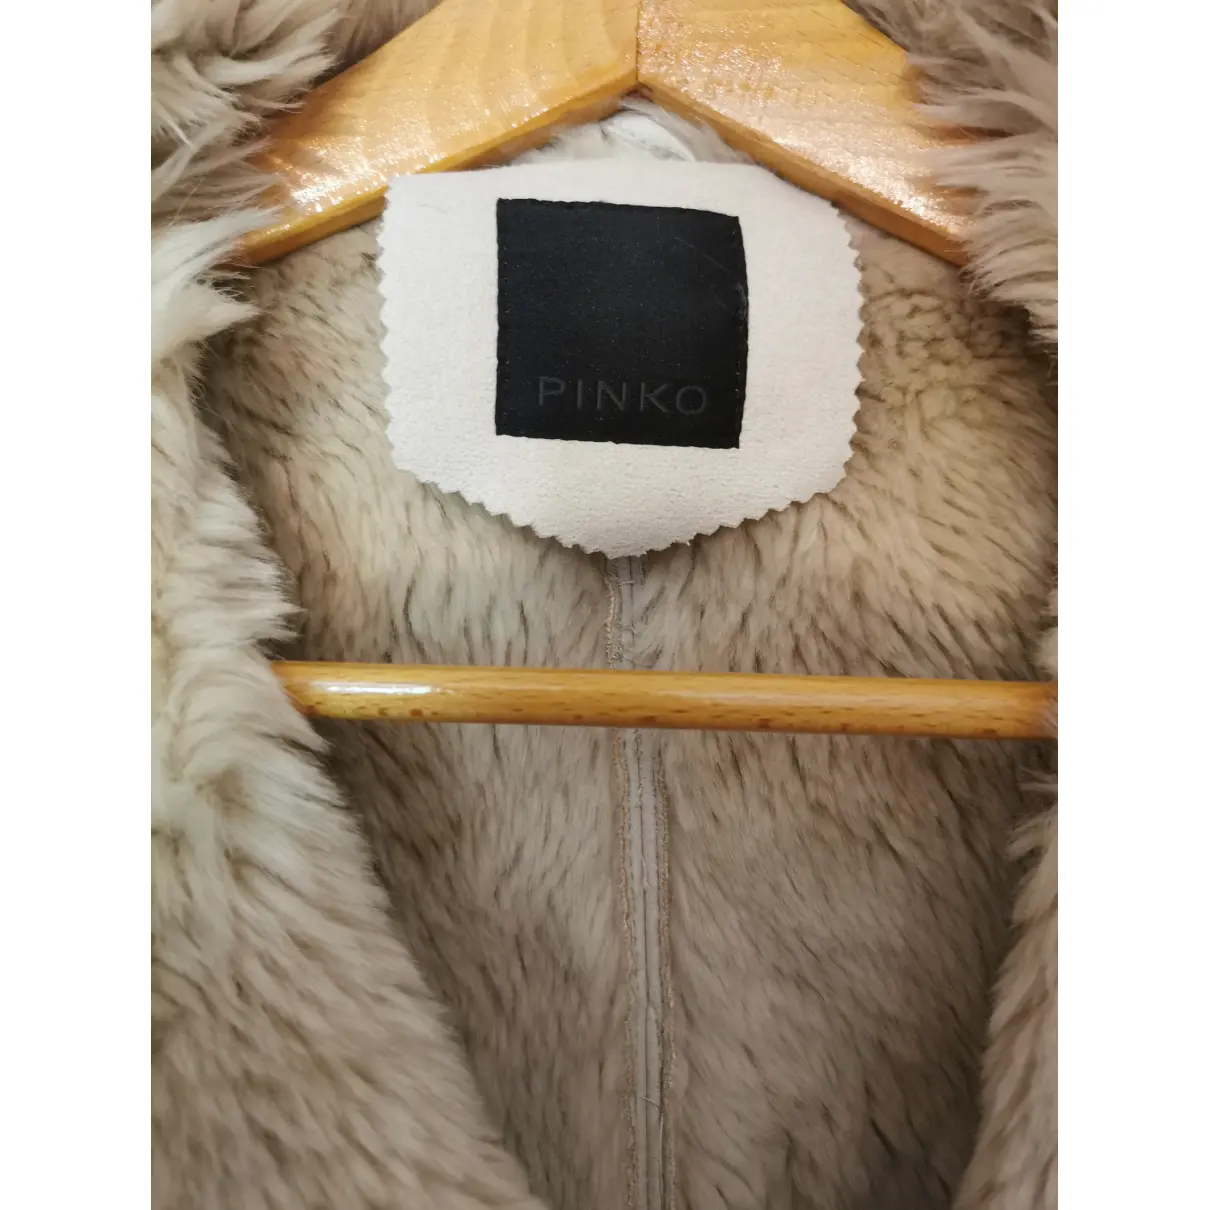 Buy Pinko Faux fur short vest online